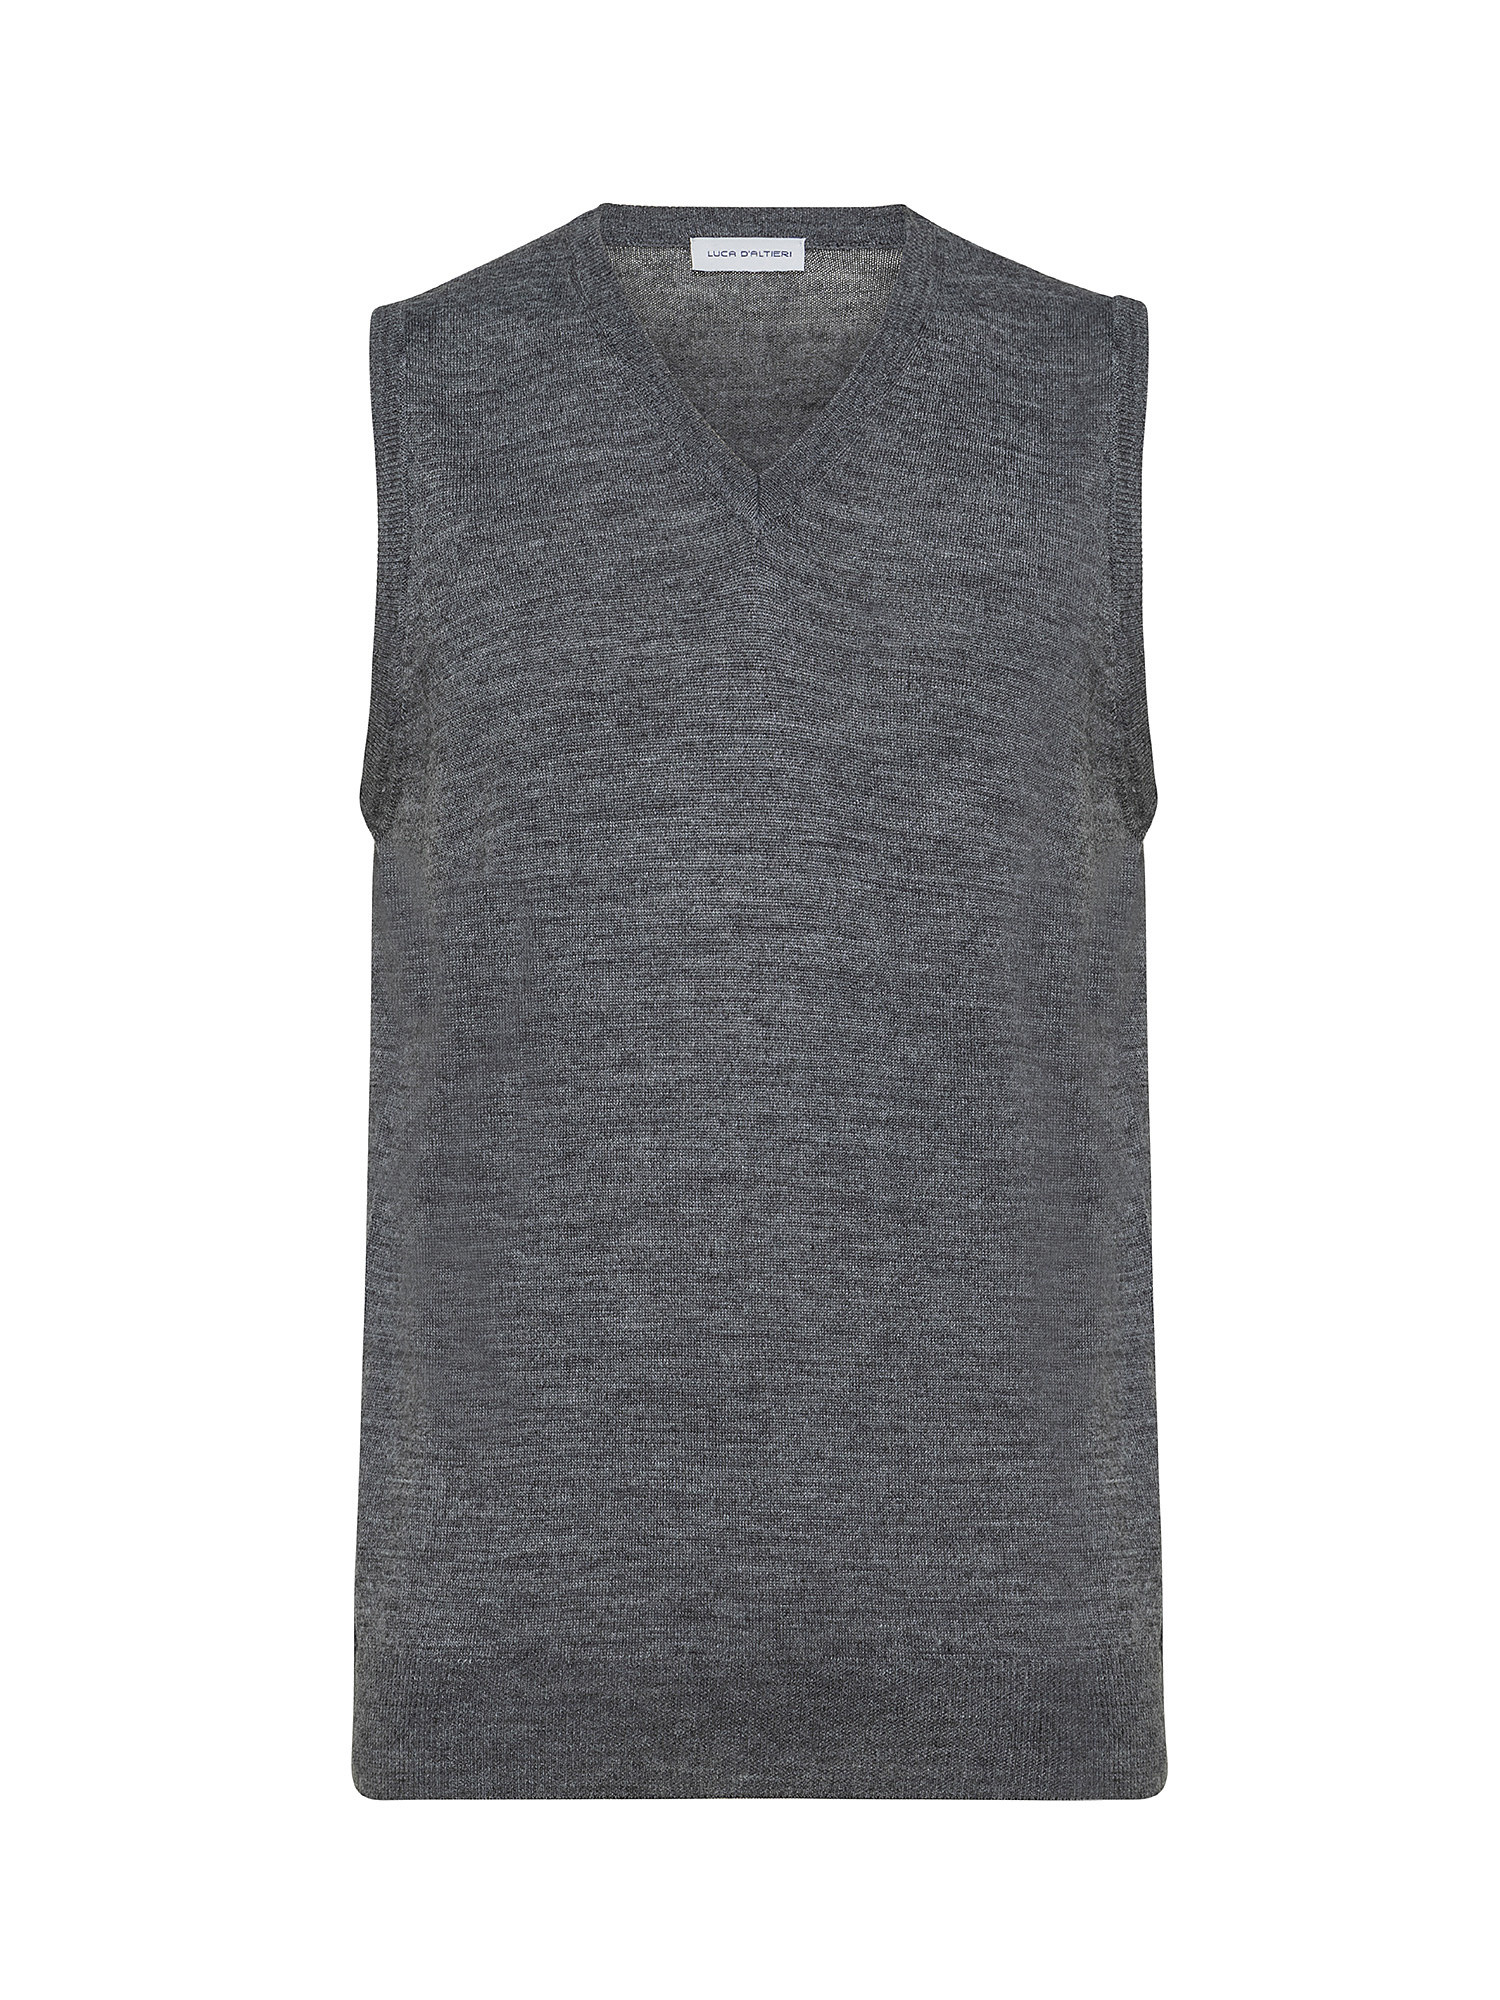 Merino Blend Vest - Machine washable, Grey, large image number 0